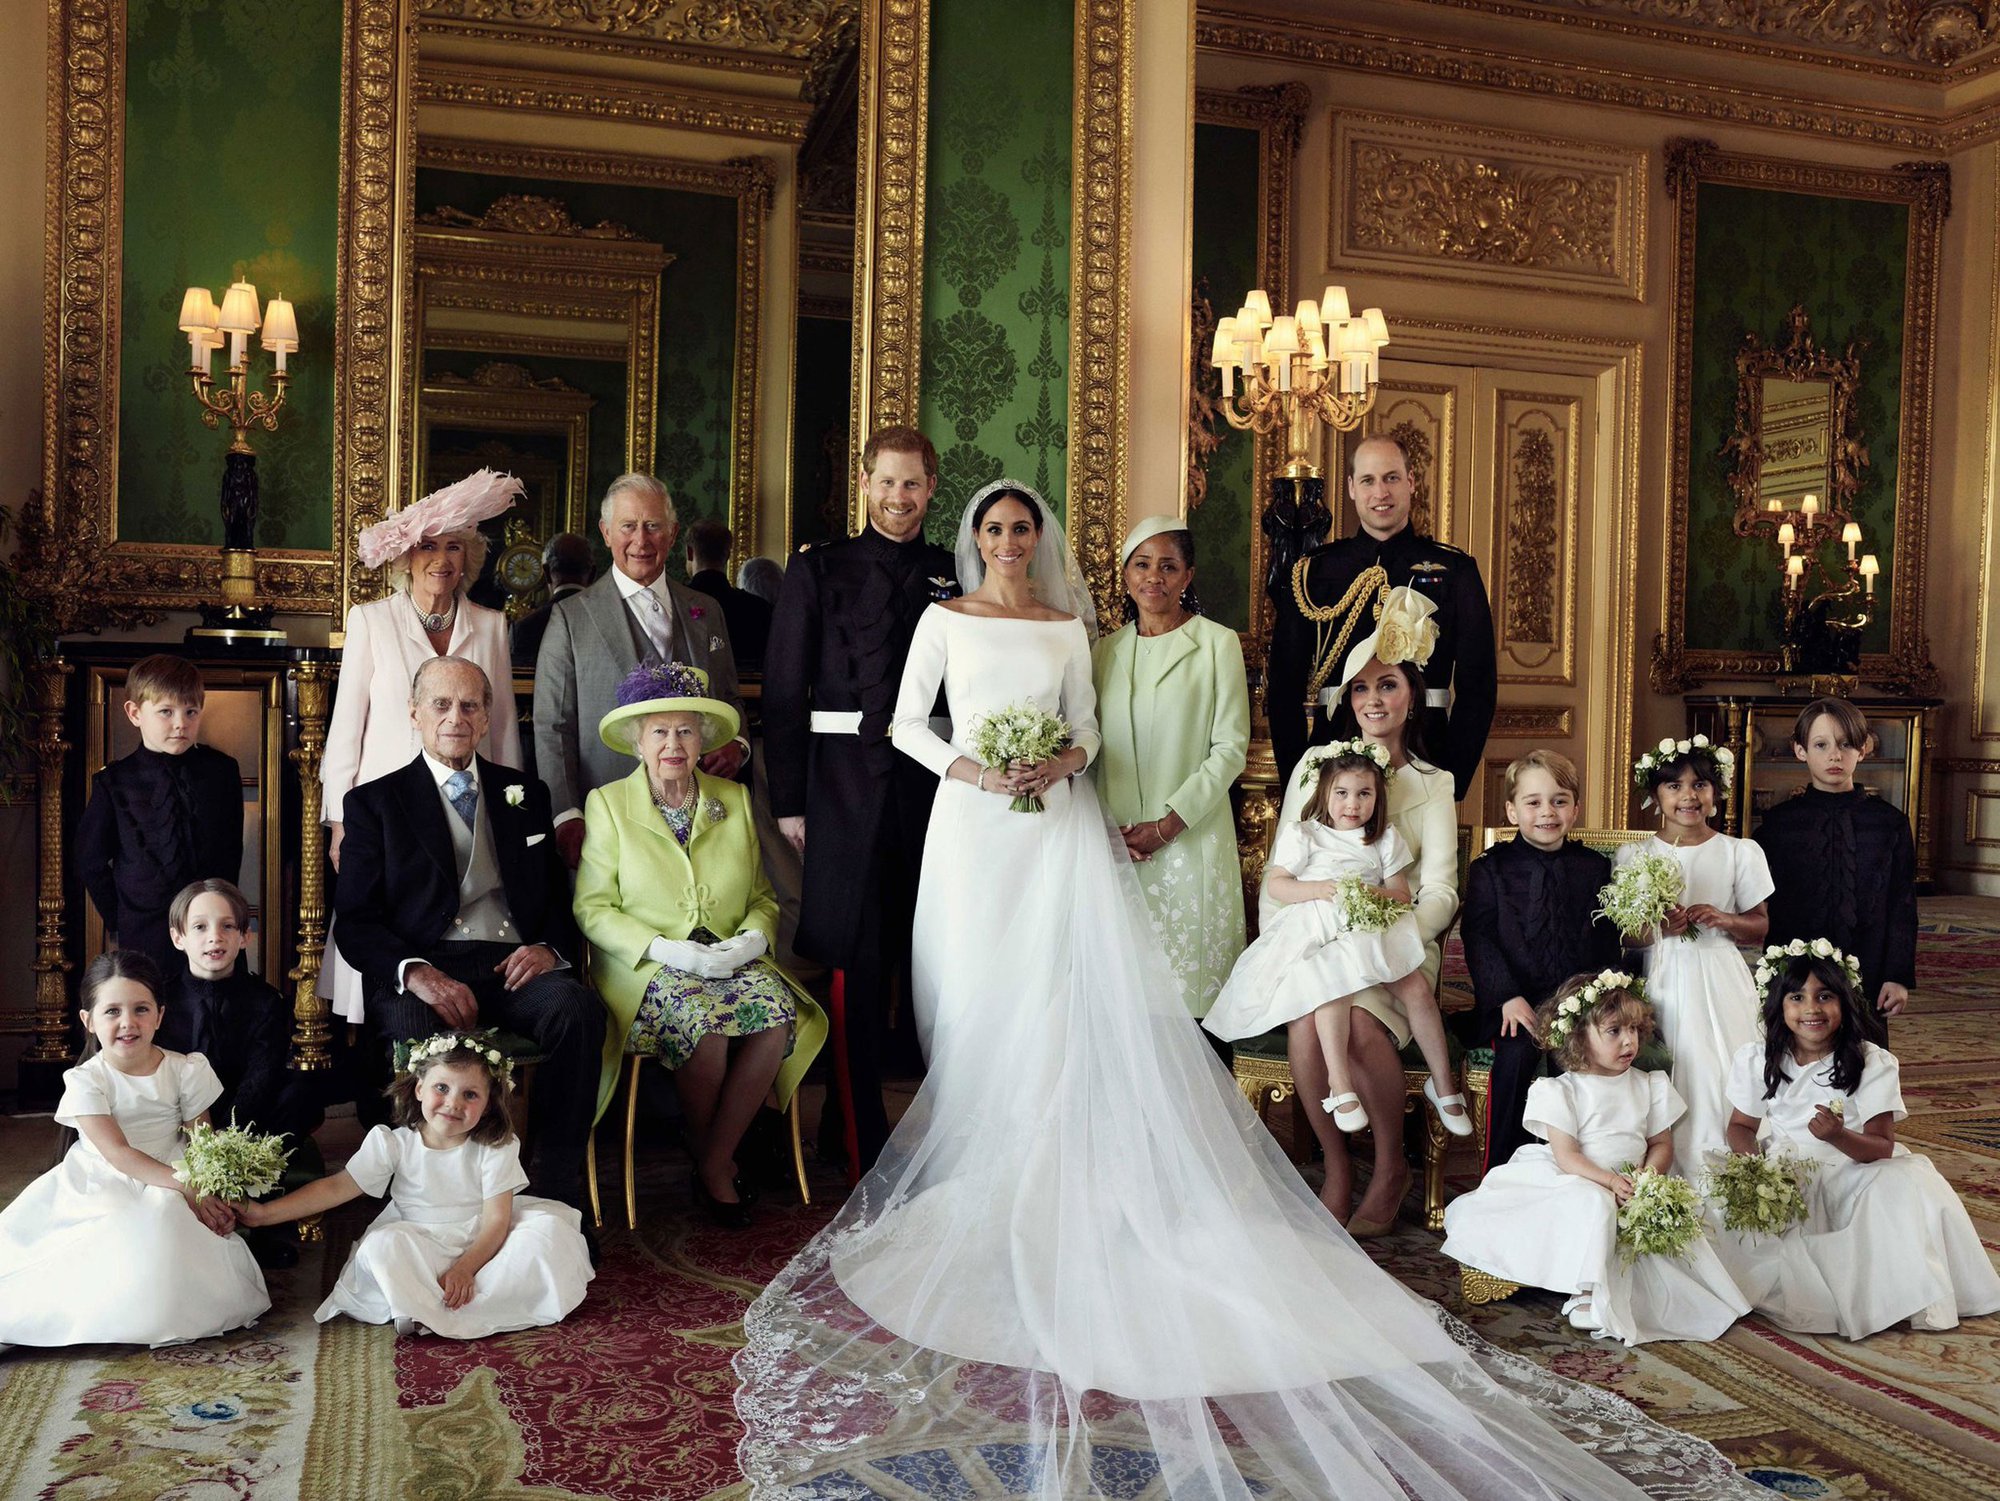 00-story-official-royal-wedding-portrait-16711003942581678464999-1671103470697-1671103470909984992725.jpg